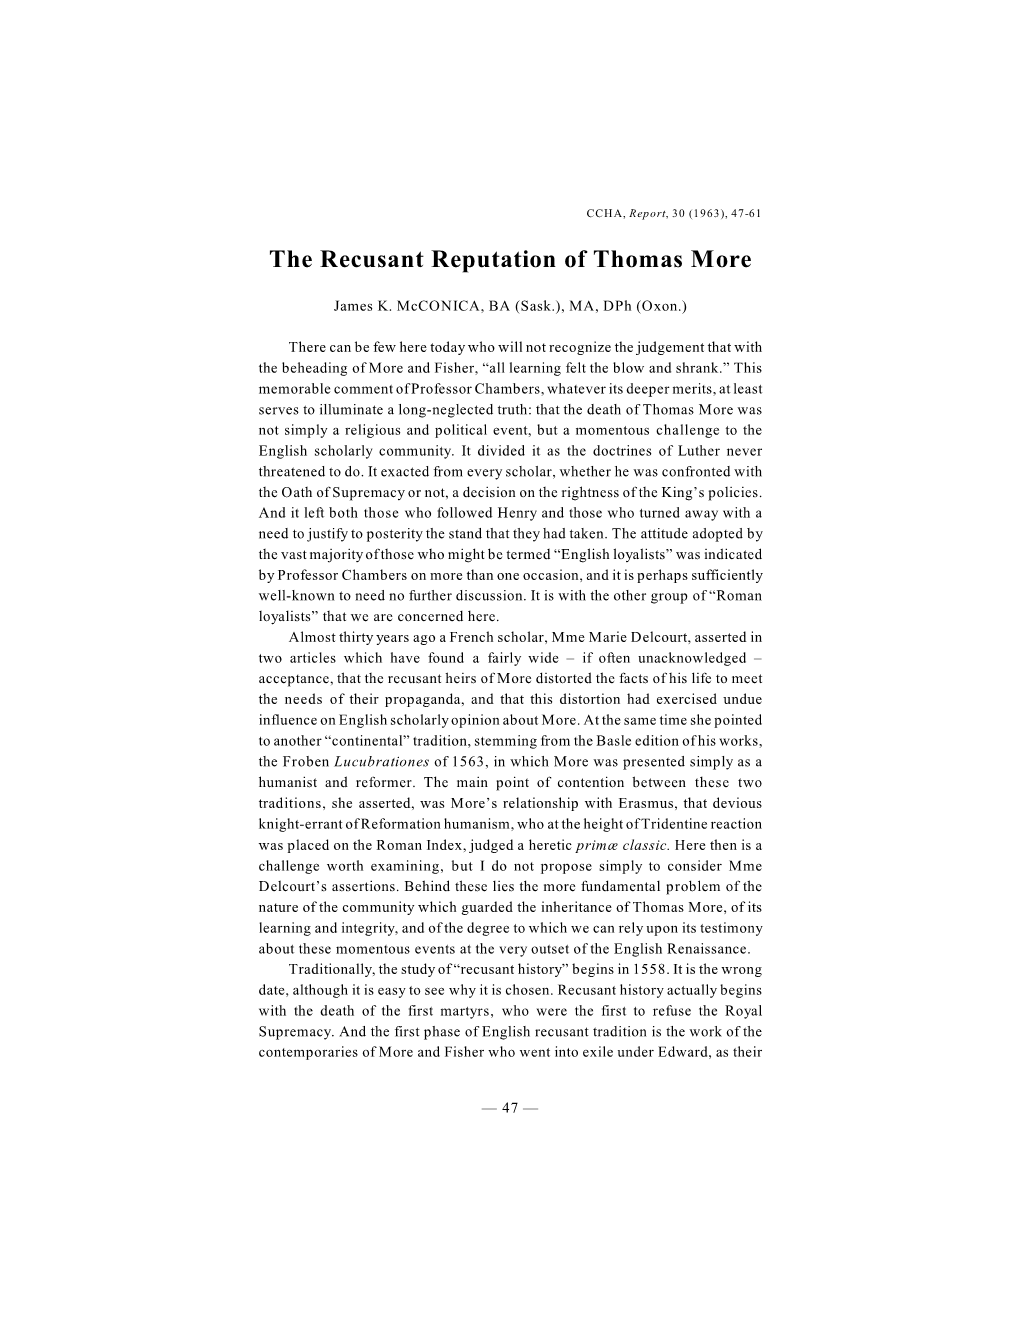 The Recusant Reputation of Thomas More